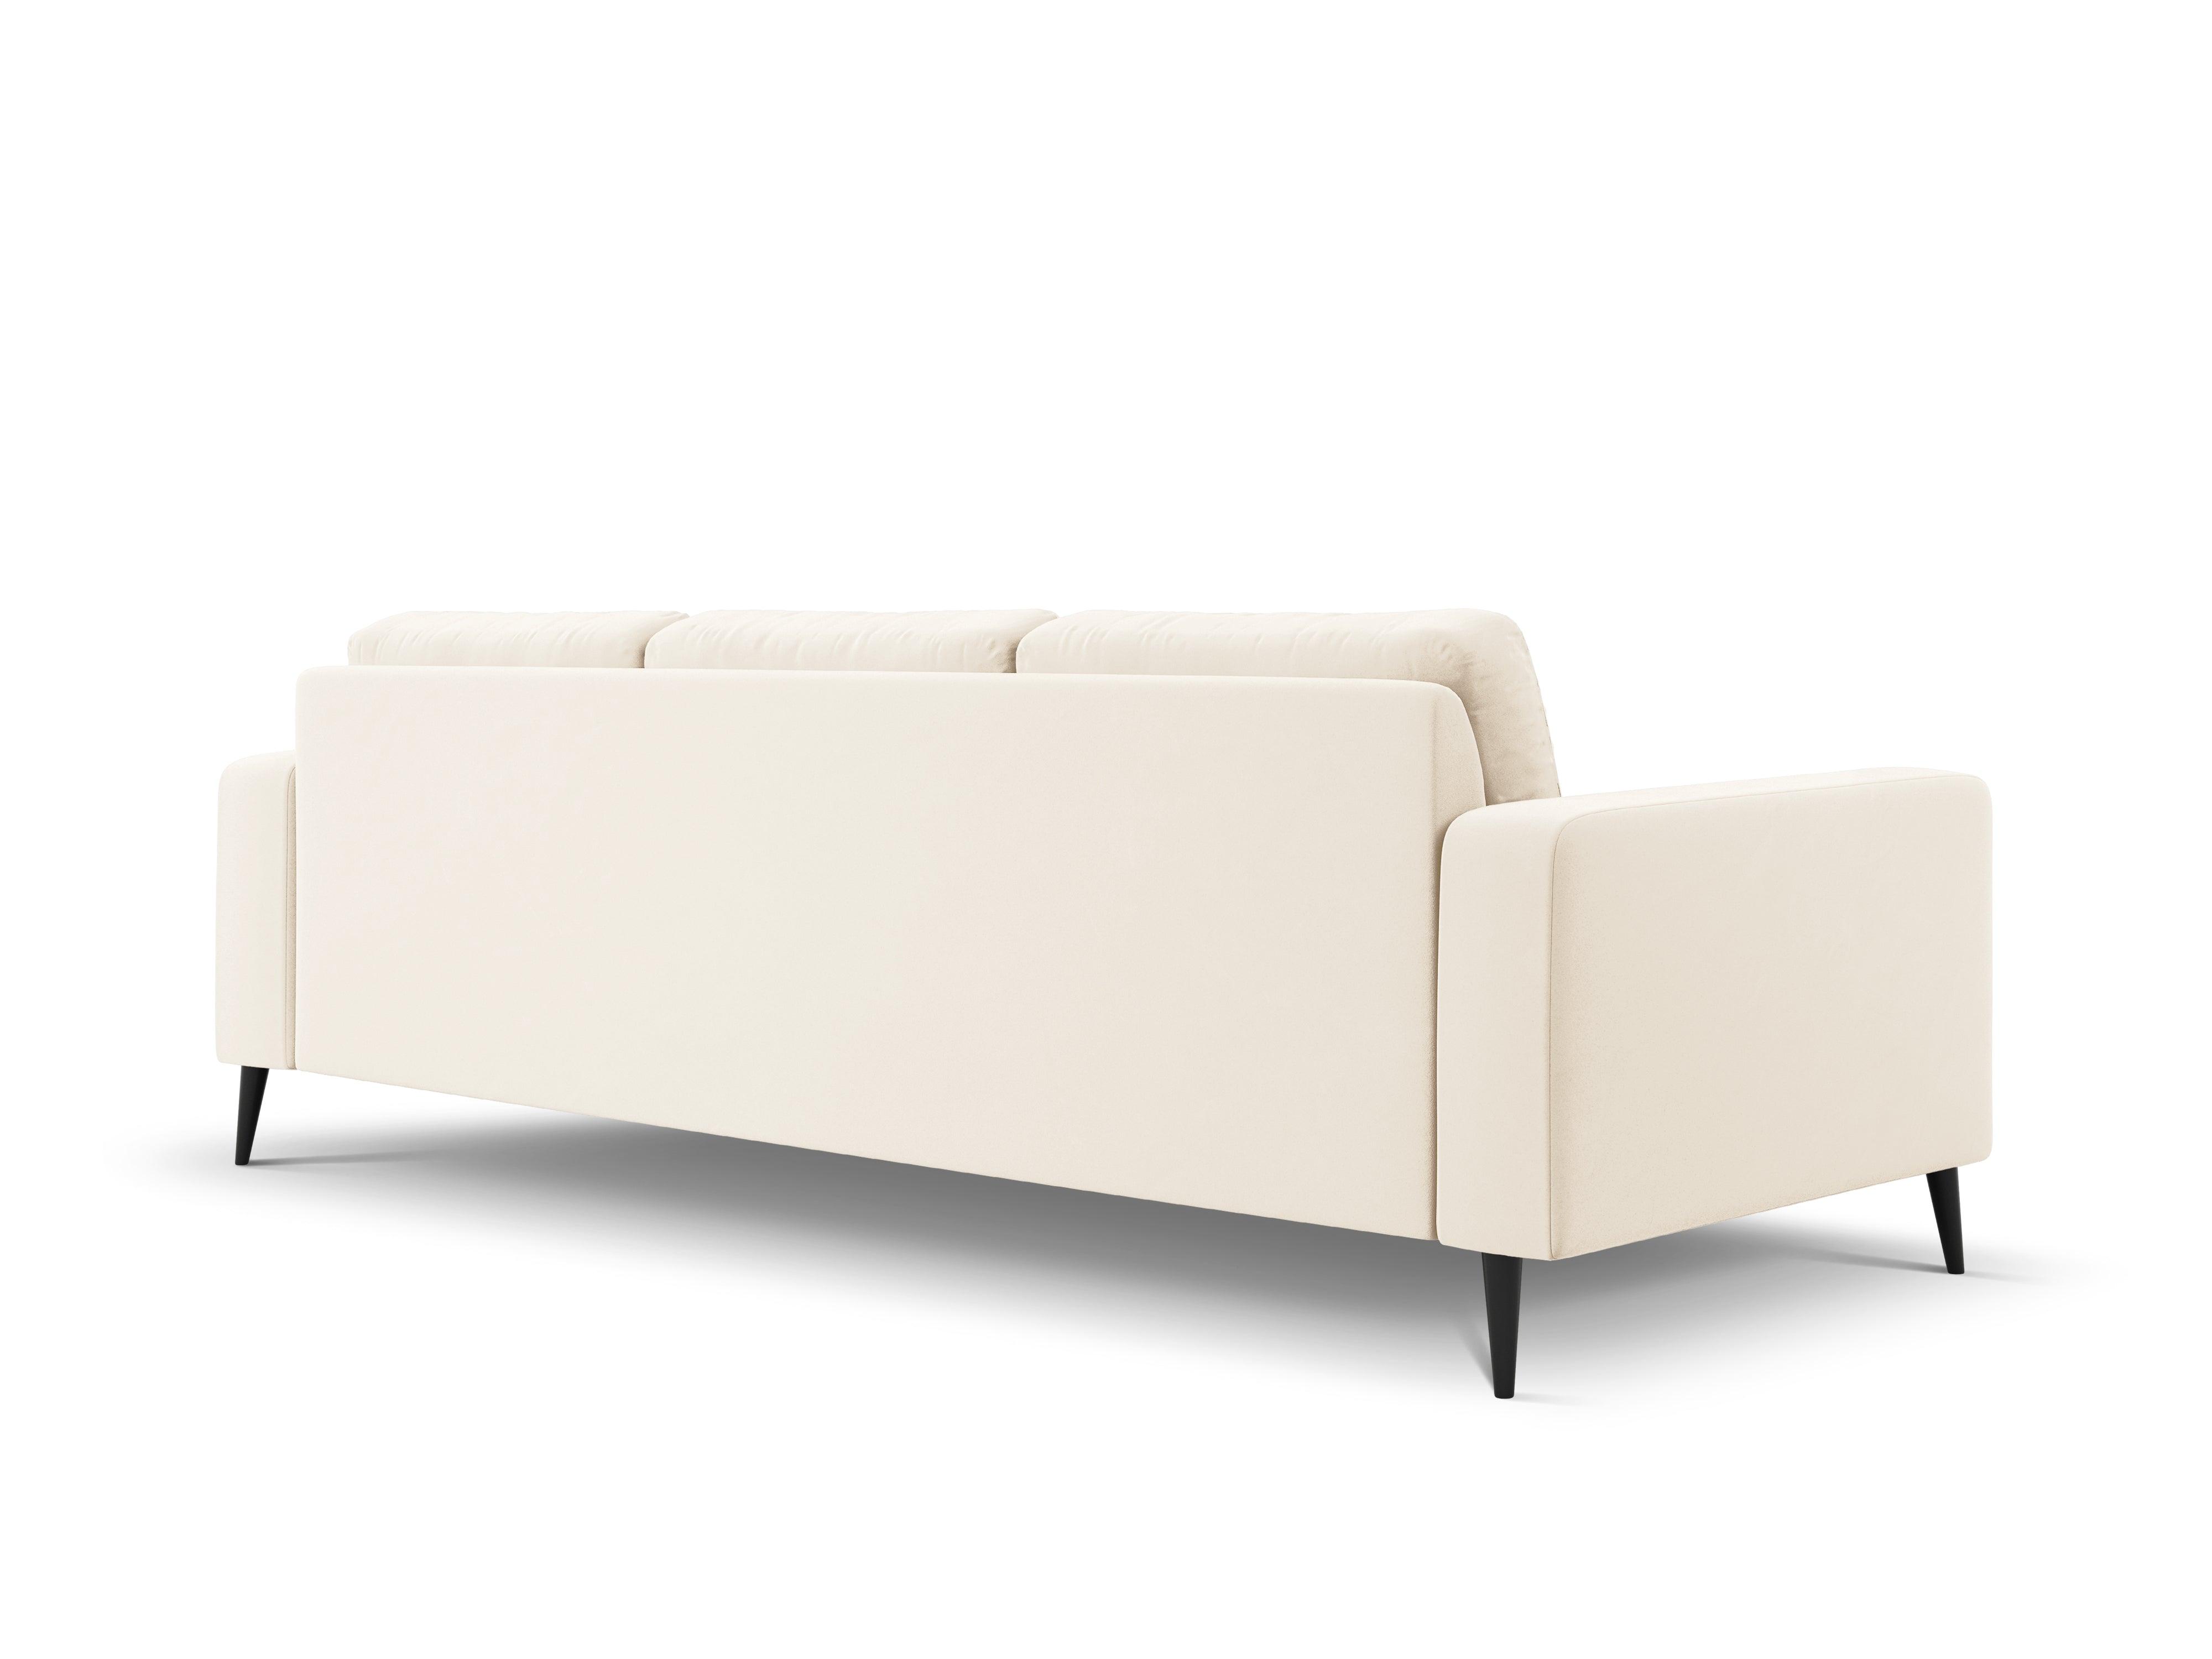 Velvet Sofa, "Kylie", 3 Seats, 227x90x80
Made in Europe, Micadoni, Eye on Design